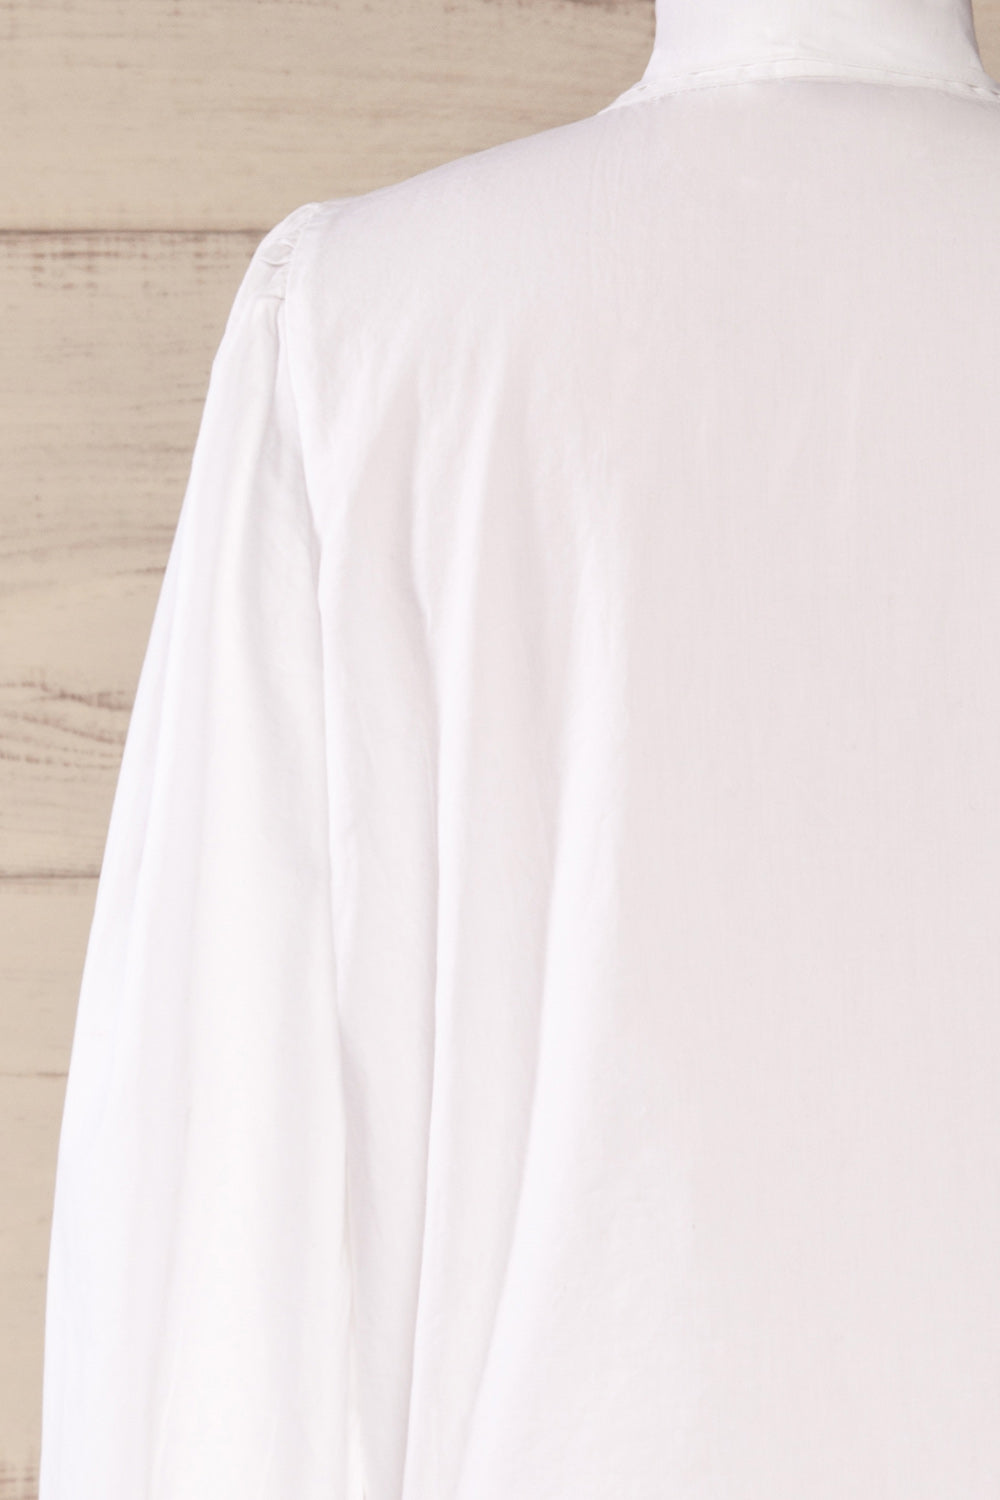 Spoletti White Long Sleeve Bow Blouse | La petite garçonne back close-up